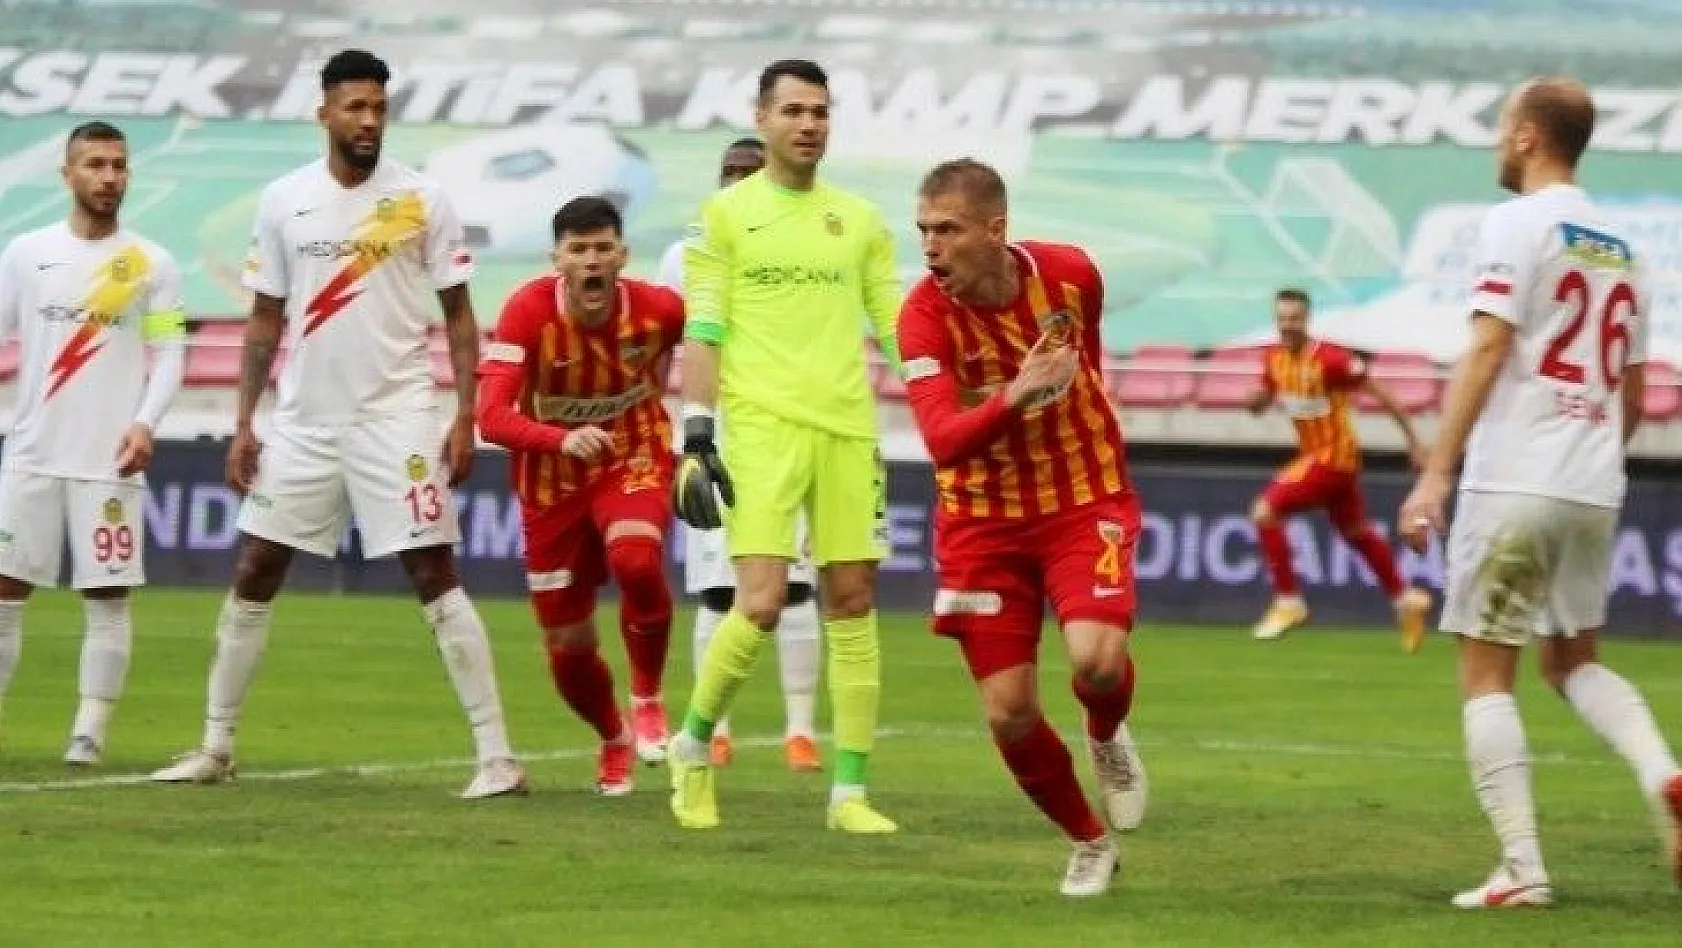 Dimitrios Kolovetsios ilk golünü attı